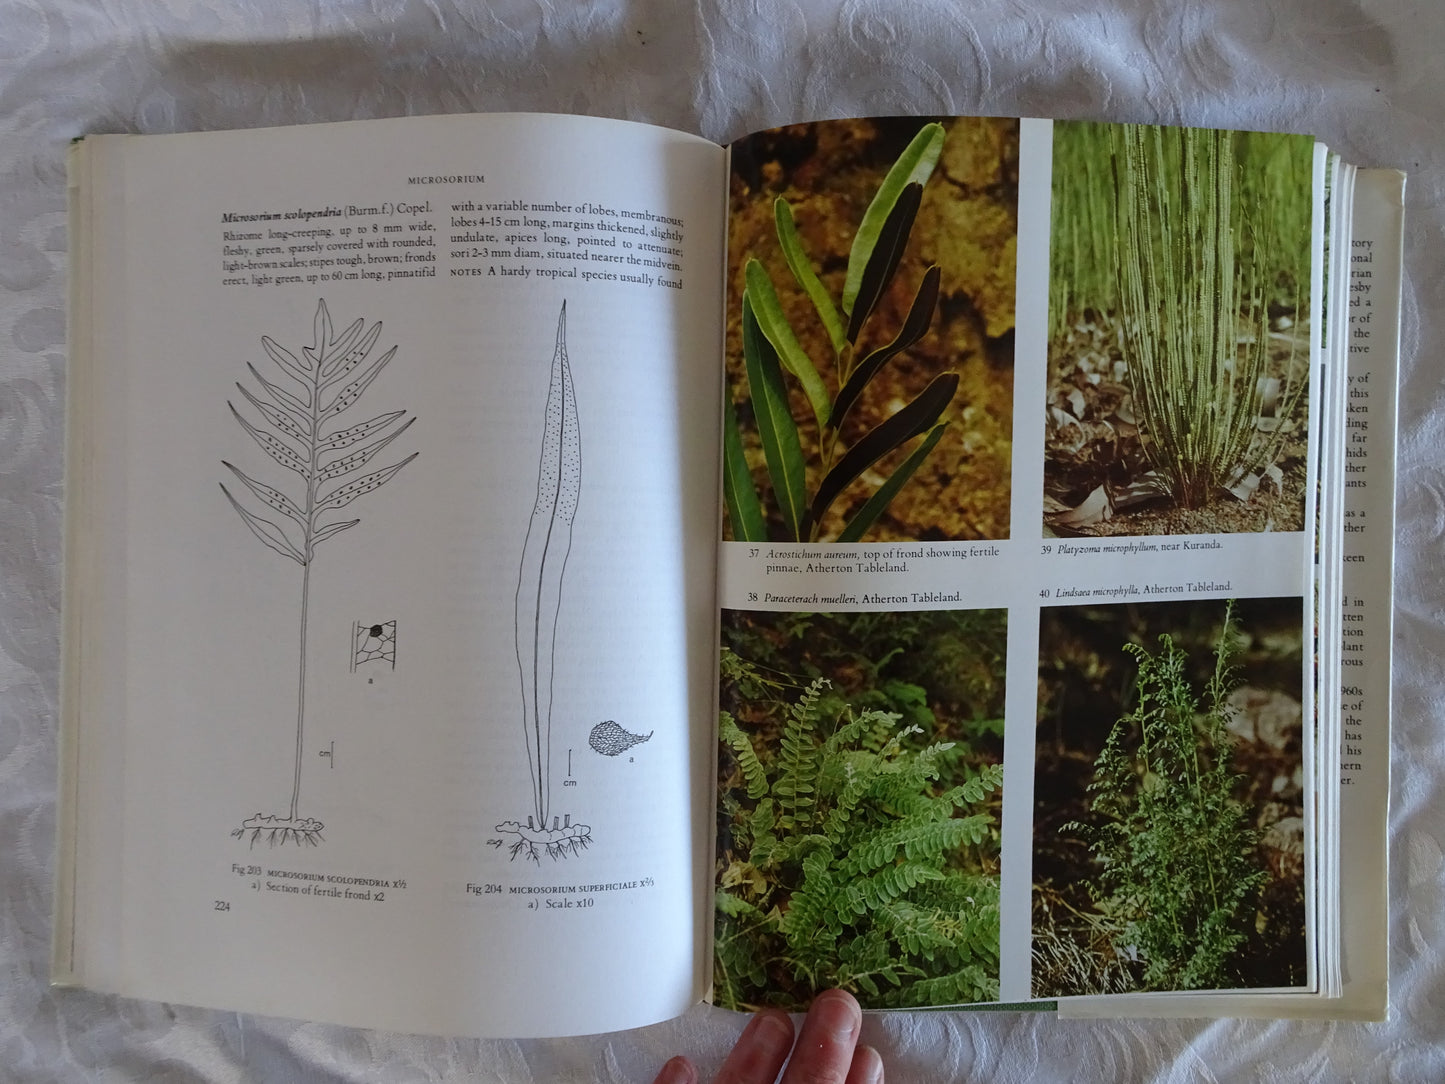 Australian Ferns and Fern Allies by D. L. Jones & S. C. Clemesha